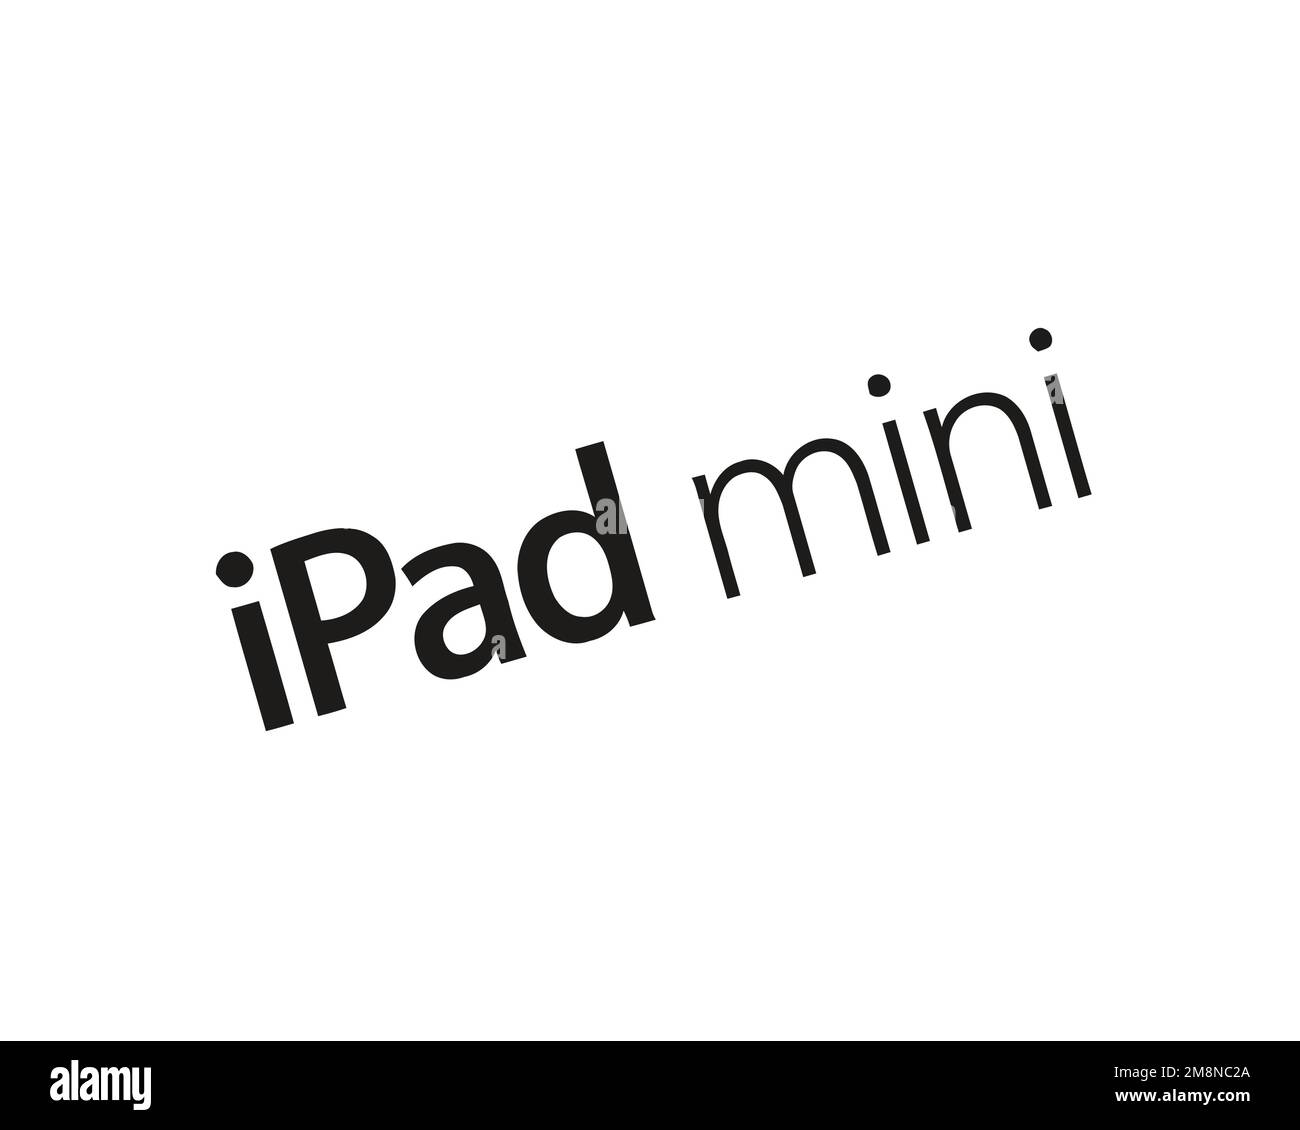 apple ipad mini logo png